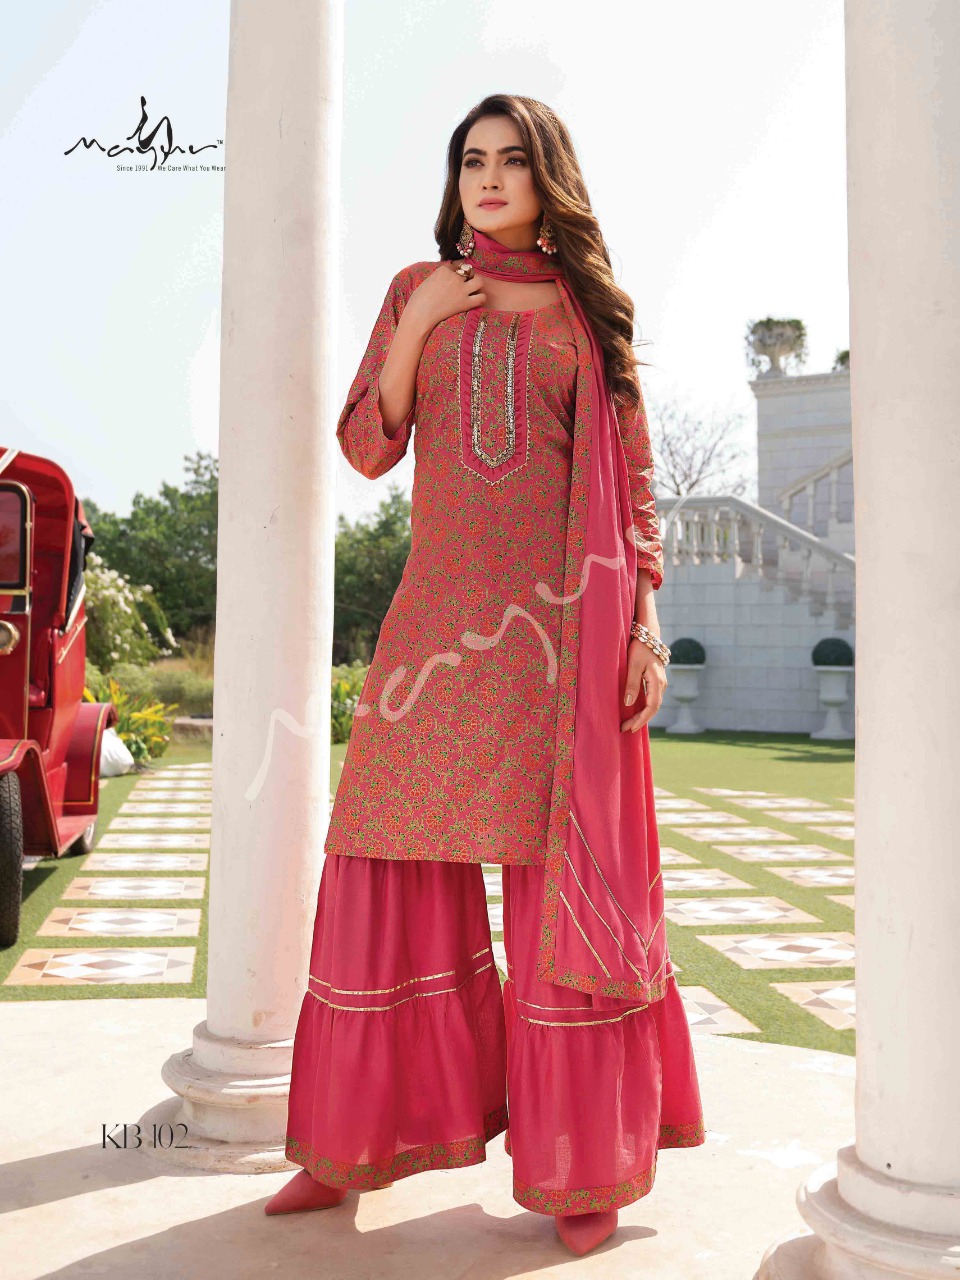 mayur kacha badam rayon gorgeous look top sharara with dupatta catalog